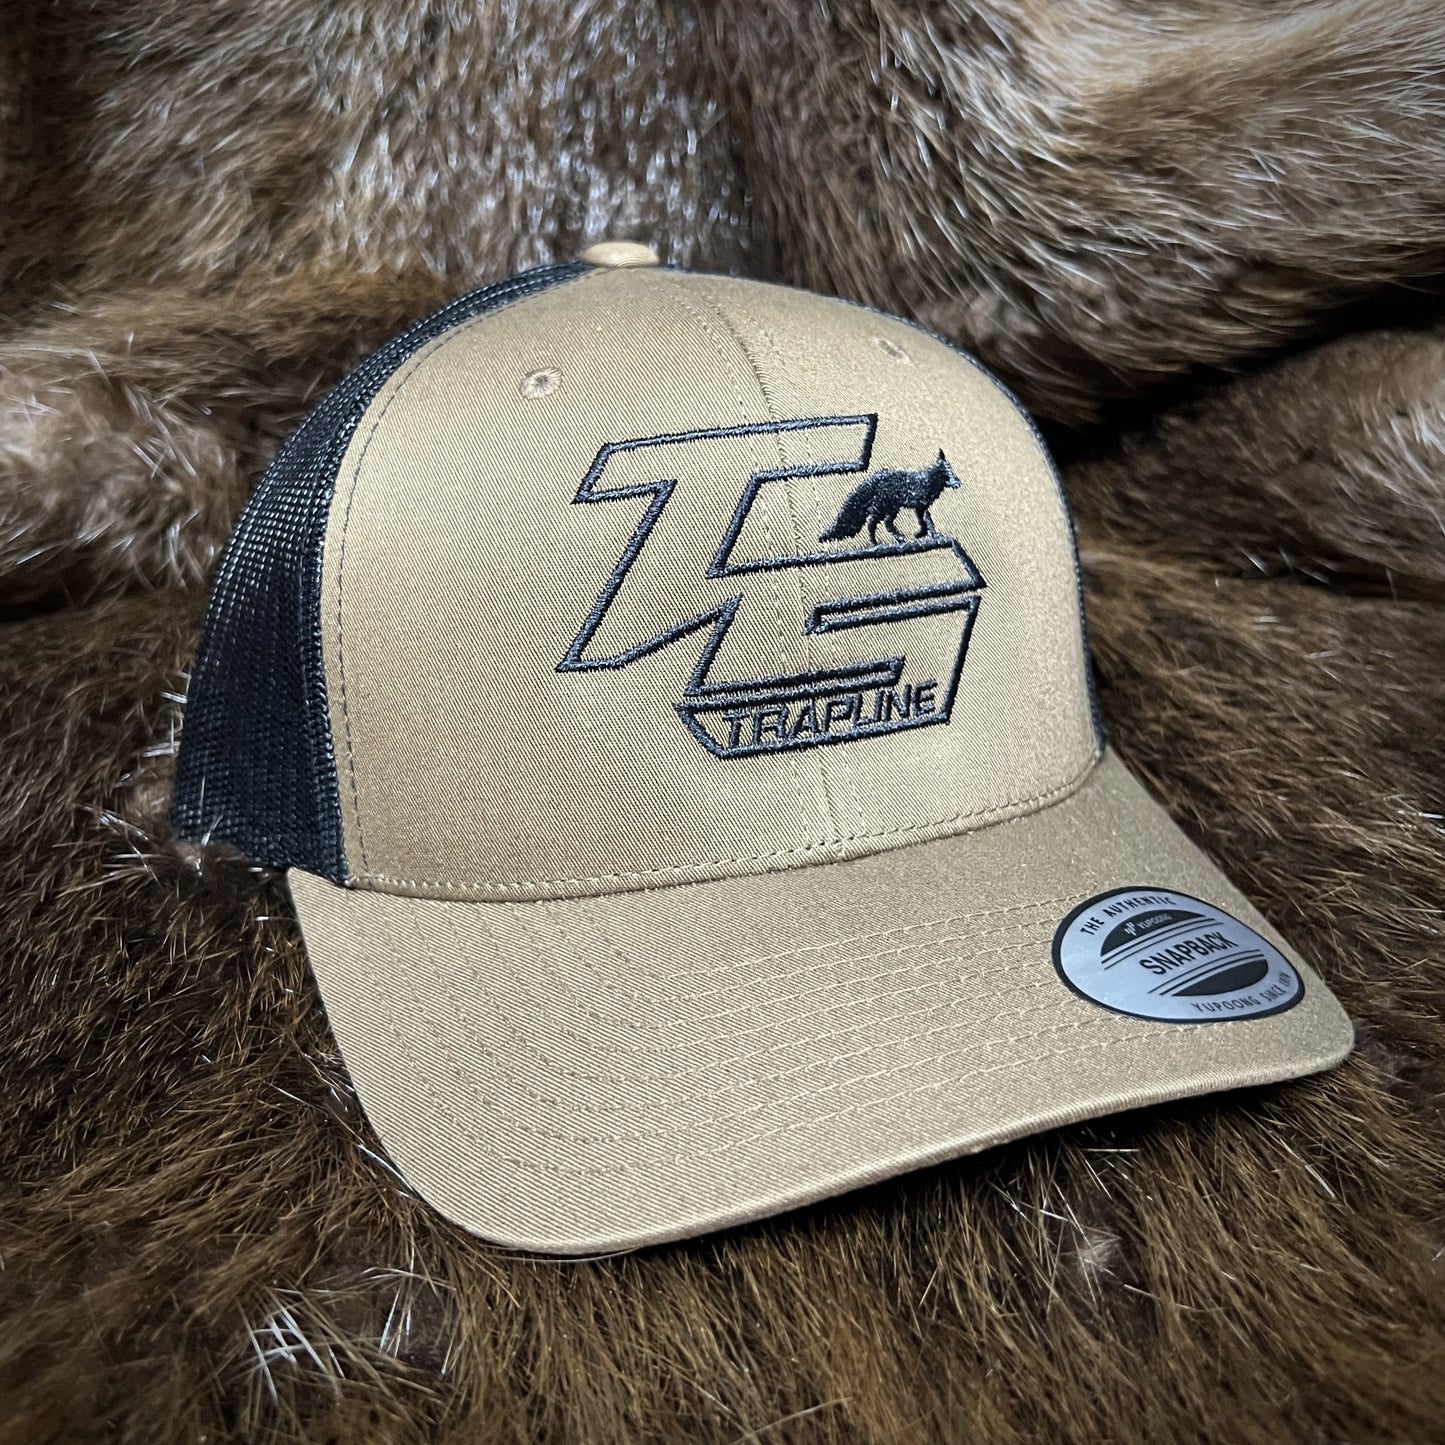 Mesh Back Trucker w/ TS Laser logo - Coyote Brown/Black